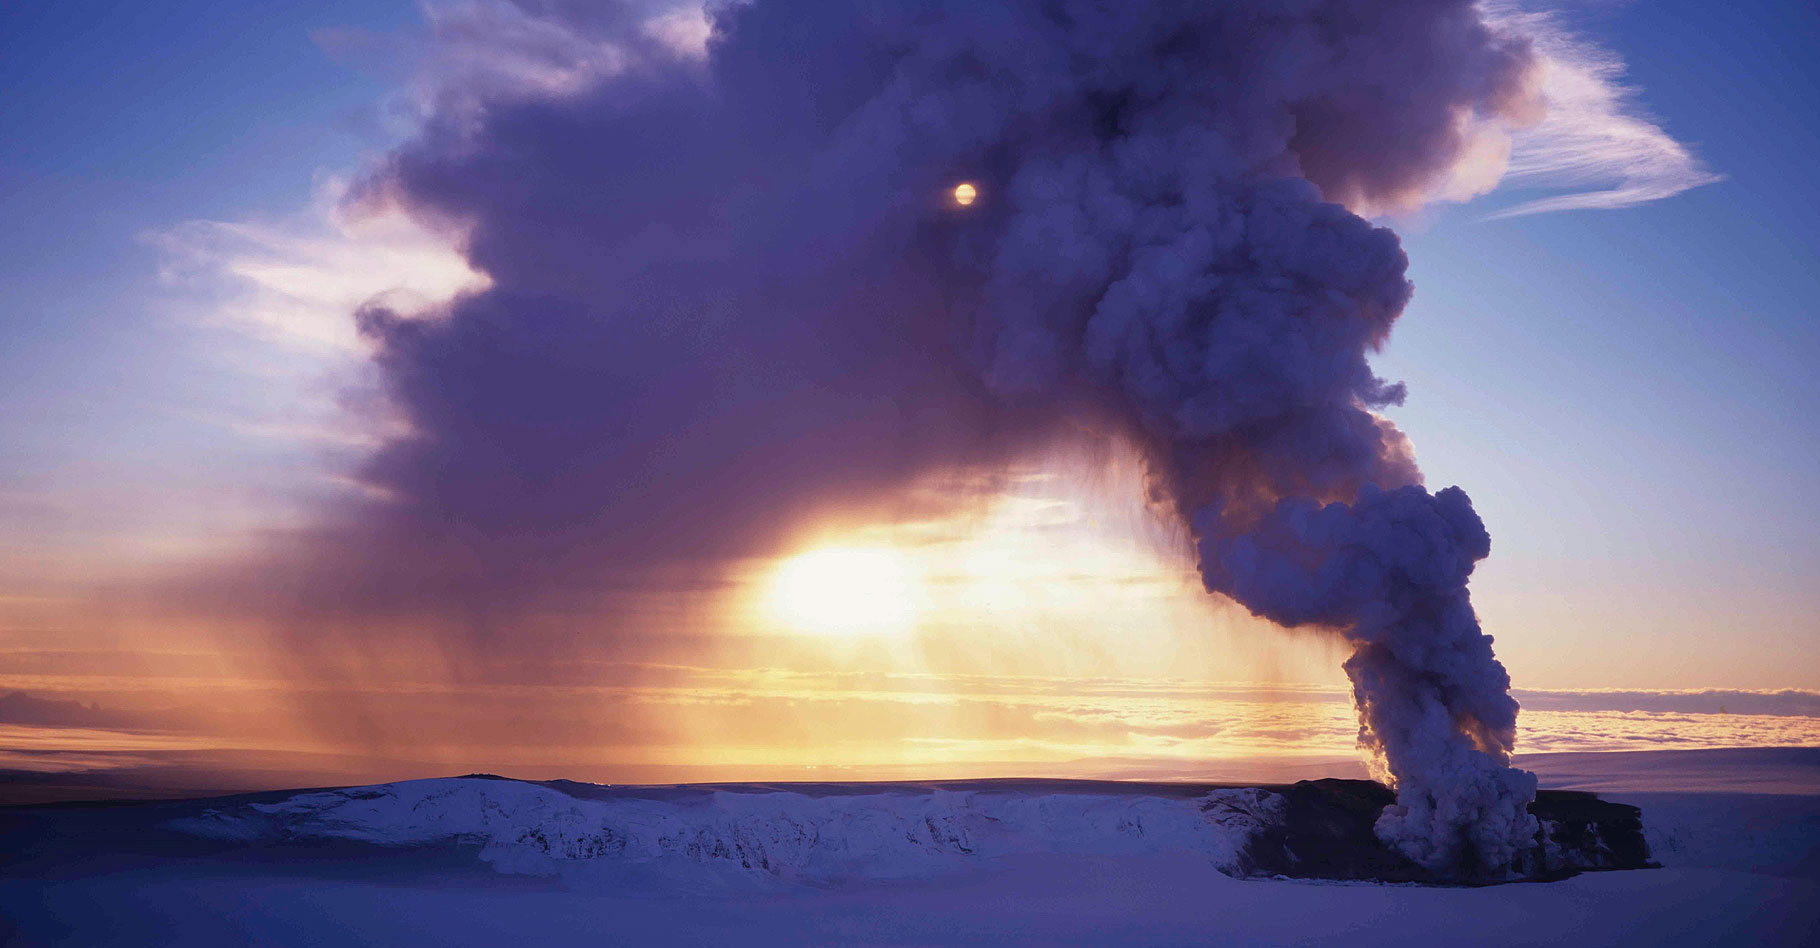 Vue de la caldera du volcan Grímsvötn caldera à&nbsp;Vatnajökull.&nbsp;© Oddur Sigurðsson, Icelandic Meteorological Office - Domaine public&nbsp;
